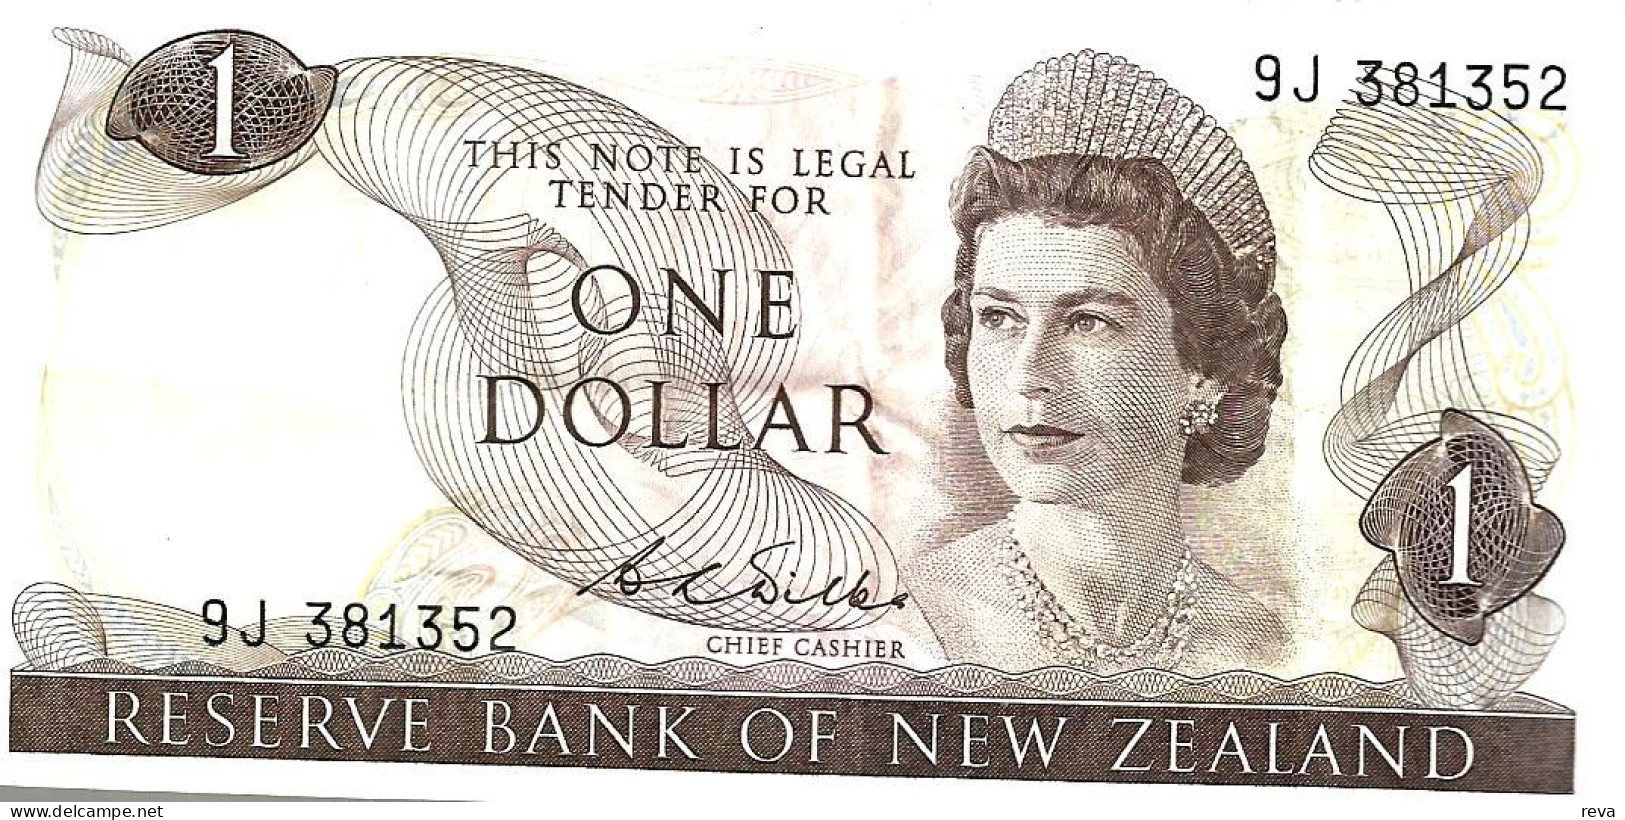 NEW ZEALAND $1 JAMES COOK WMK 1ST ISSUE HEAD OF QEII BIRD BACK ND(1968-75) SIGN WILKS P.163b VF READ DESCRIPTION - Nieuw-Zeeland